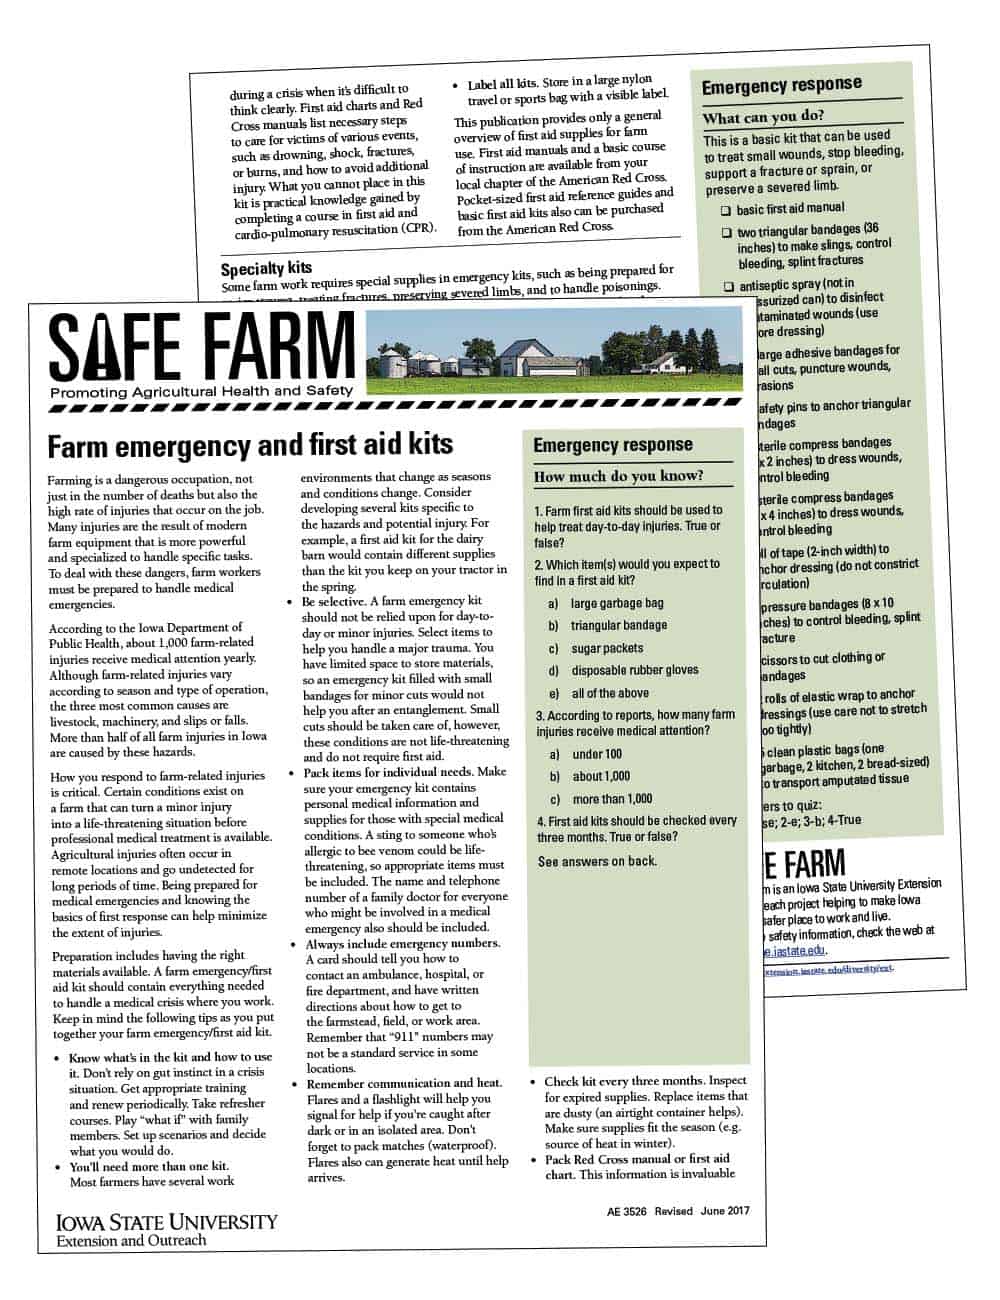 SAFE FARM: Farm emergency and first aid kits